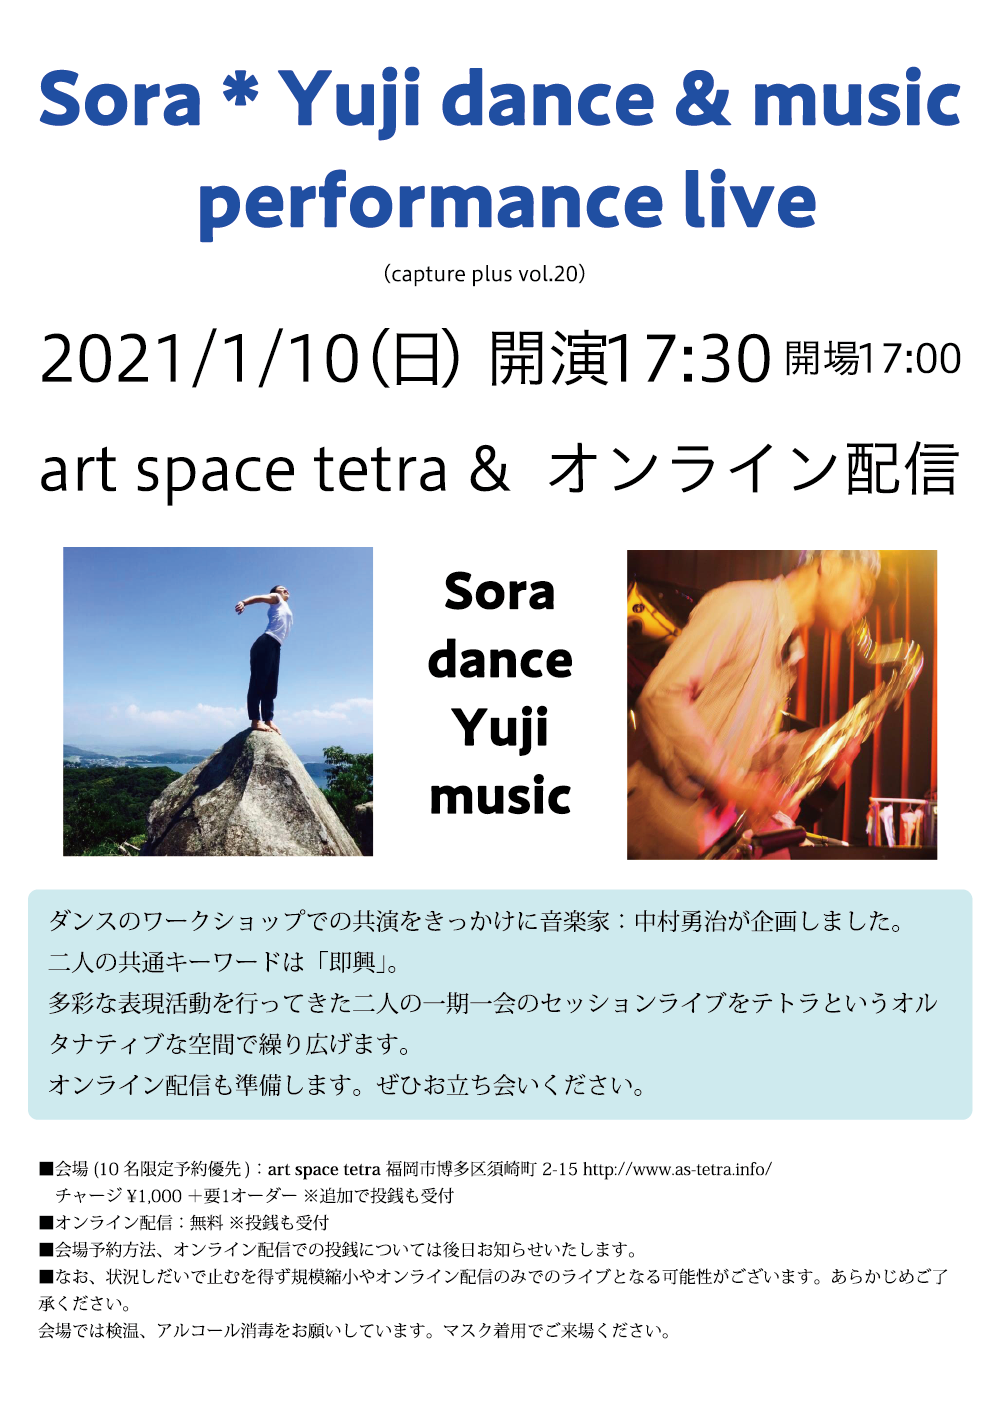 Sora * Yuji dance & music performance live (capture plus vol.20)